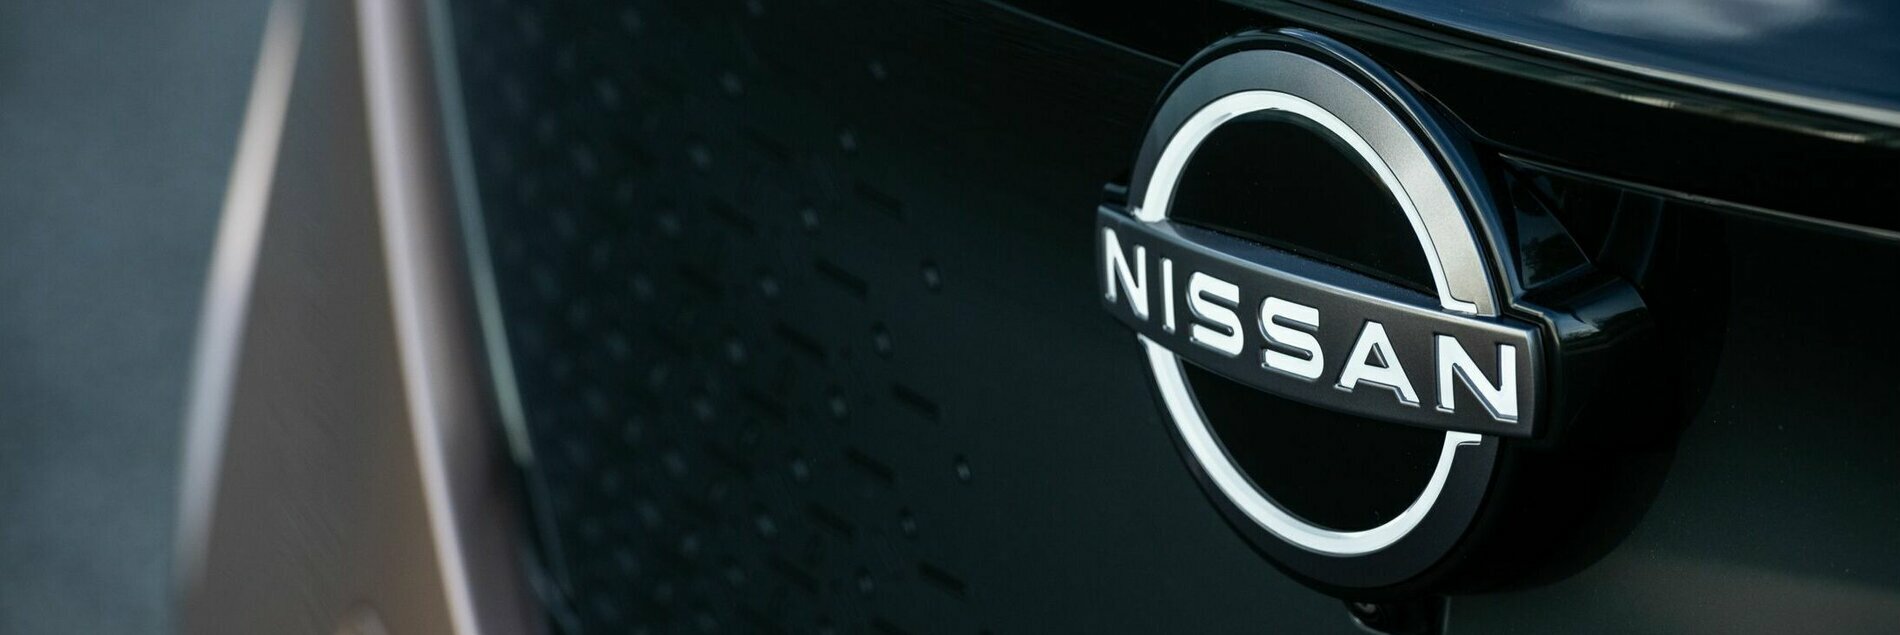    Nissan      Major -     